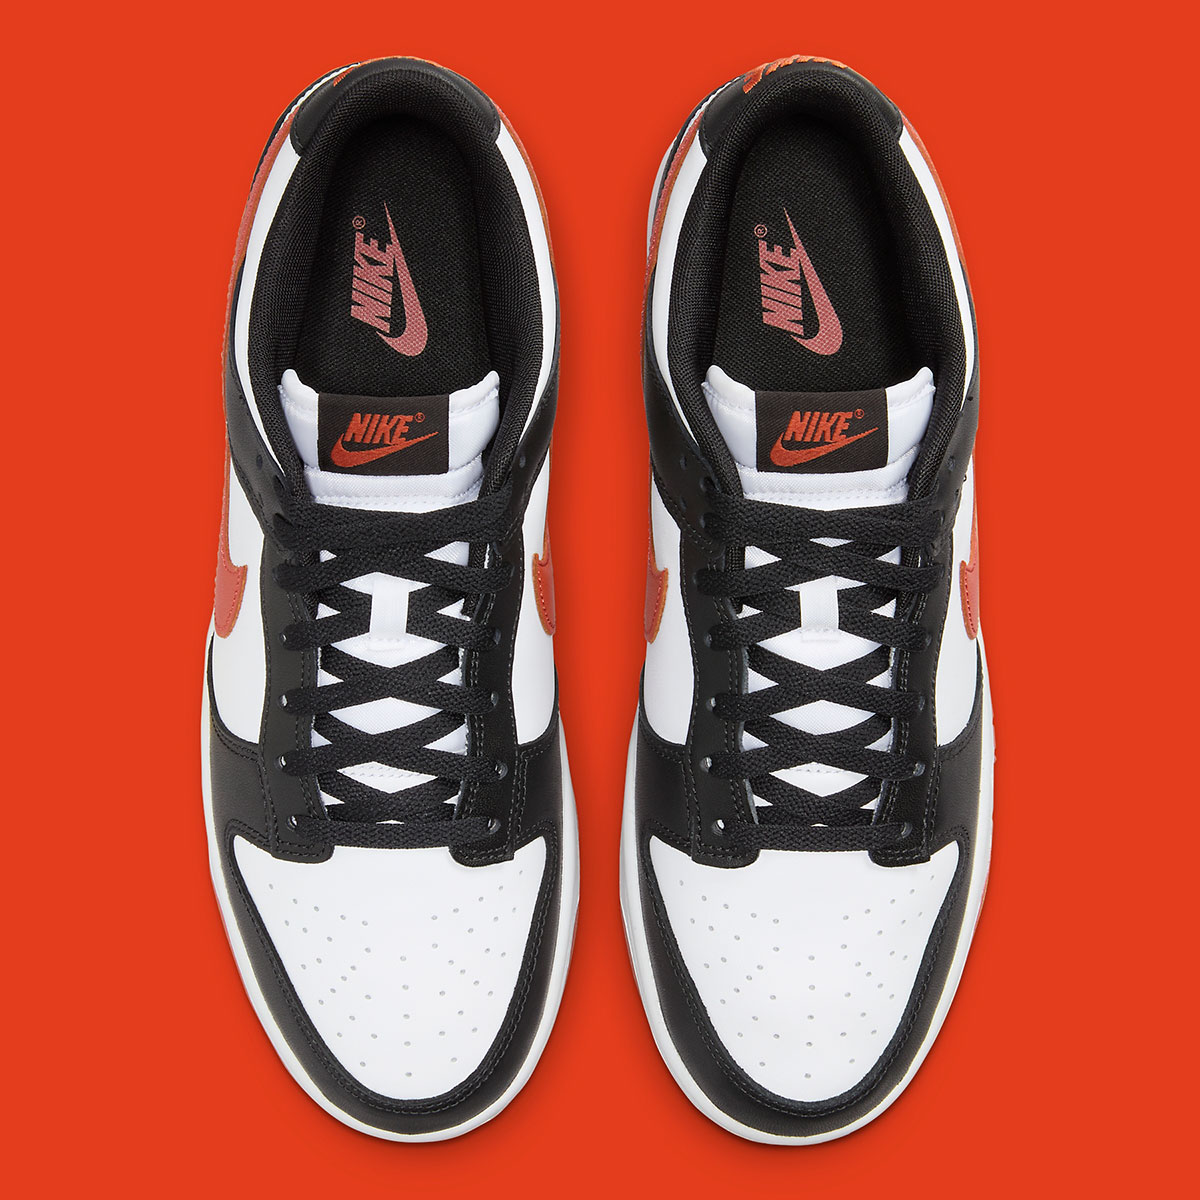 Nike LeBron 12 Data Arriving to Retailers White Dragon Red Black Dv0833 108 5